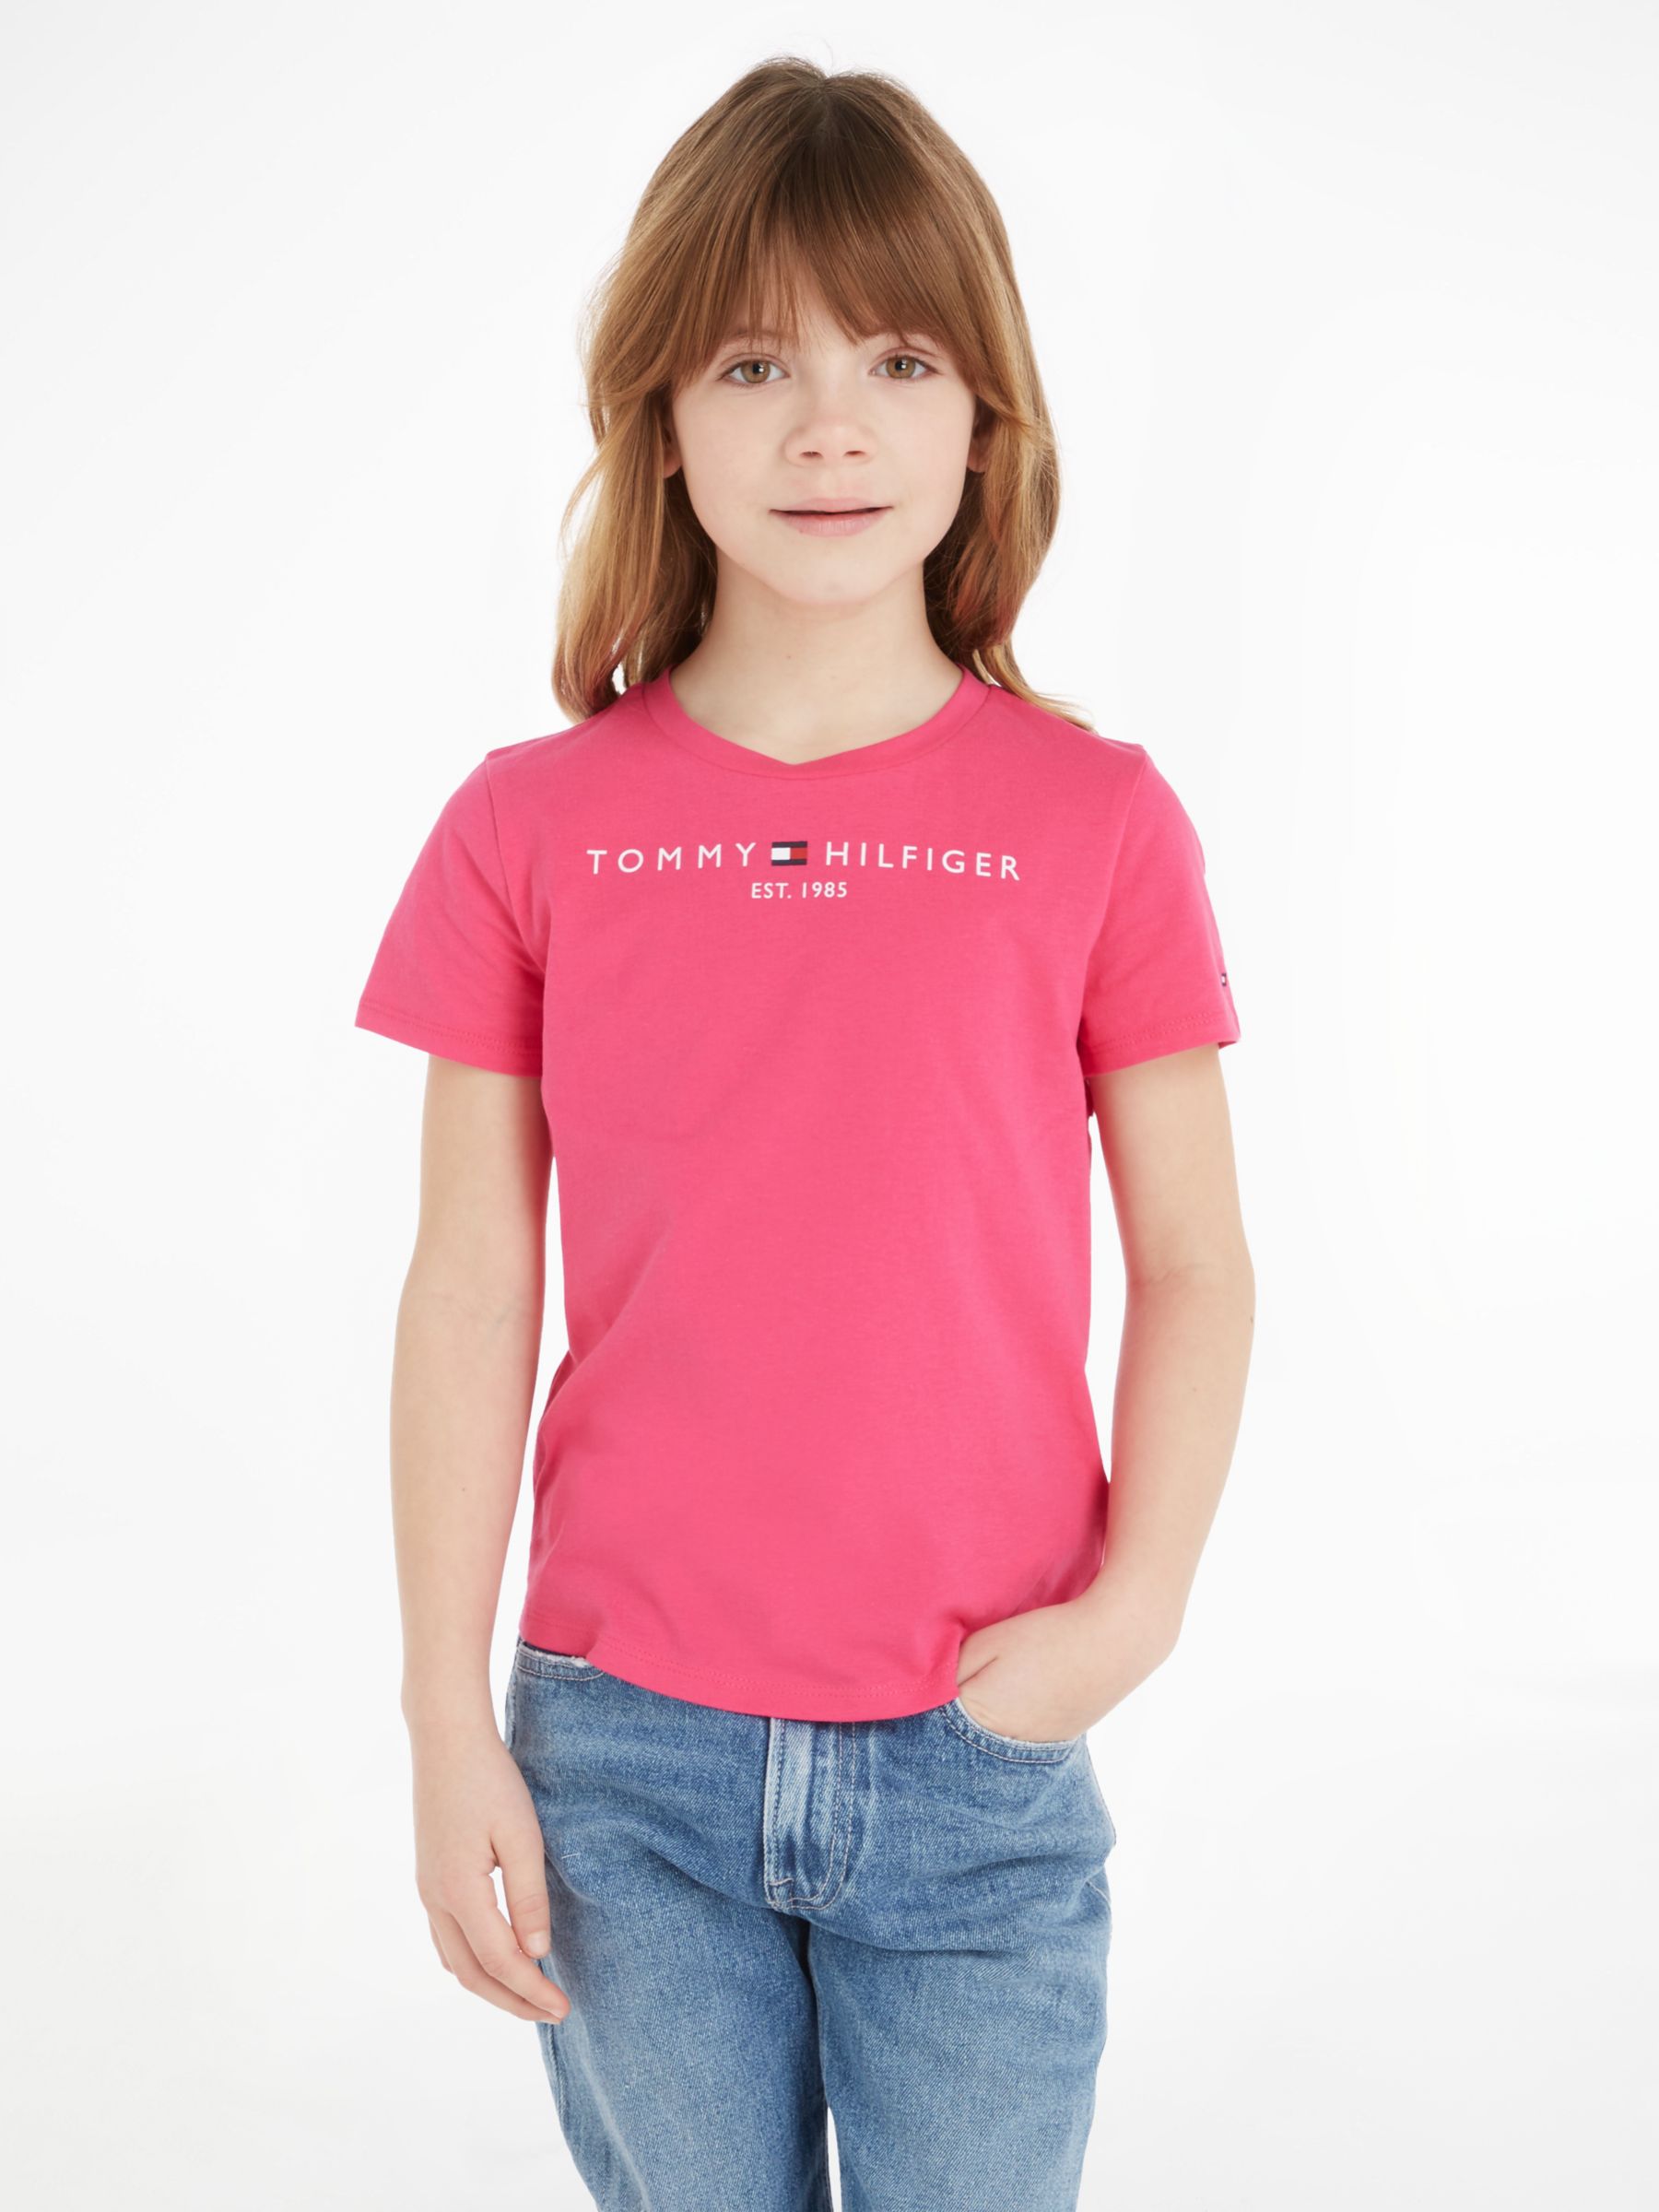 Sleeve Hilfiger Hot Essential Tommy Short Lewis T-Shirt, Partners Kids\' John at & Magenta